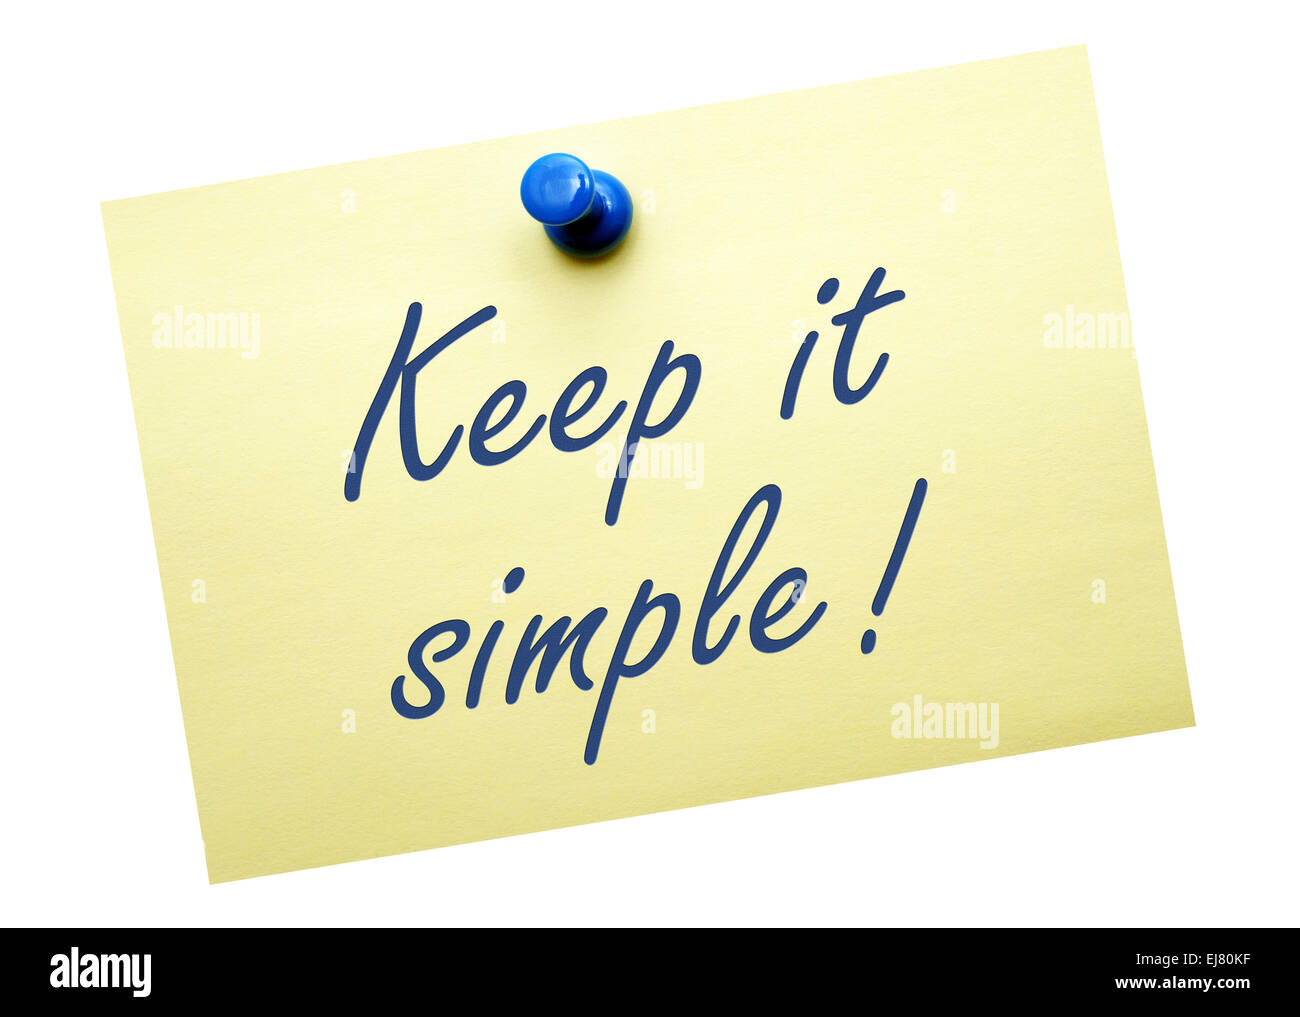 Keep it simple ! Stock Photo